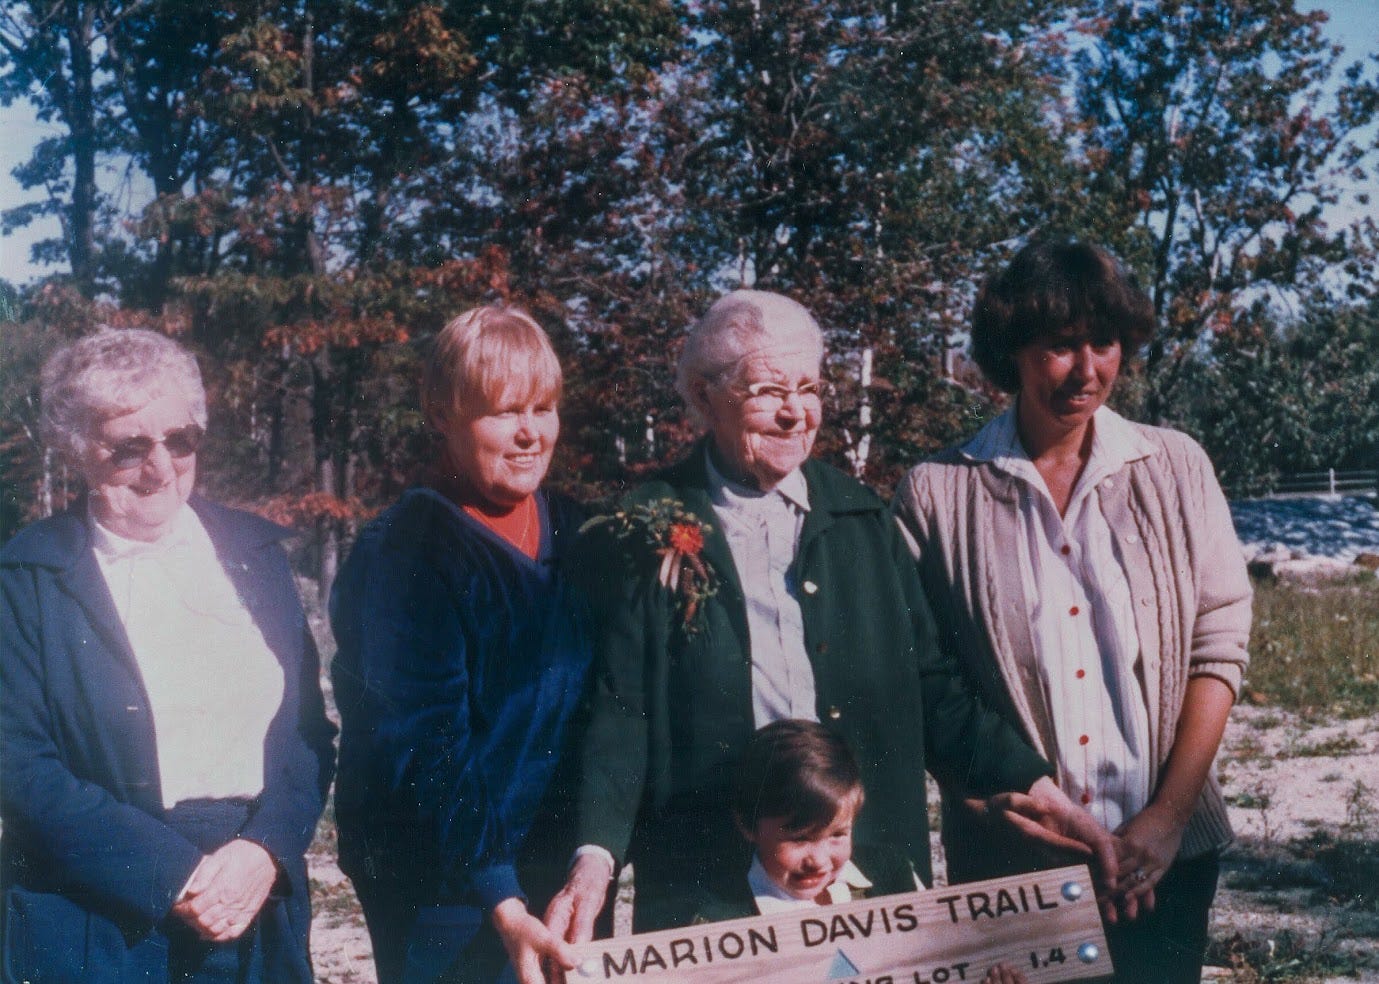 Dedication of the Marion Davis Trail